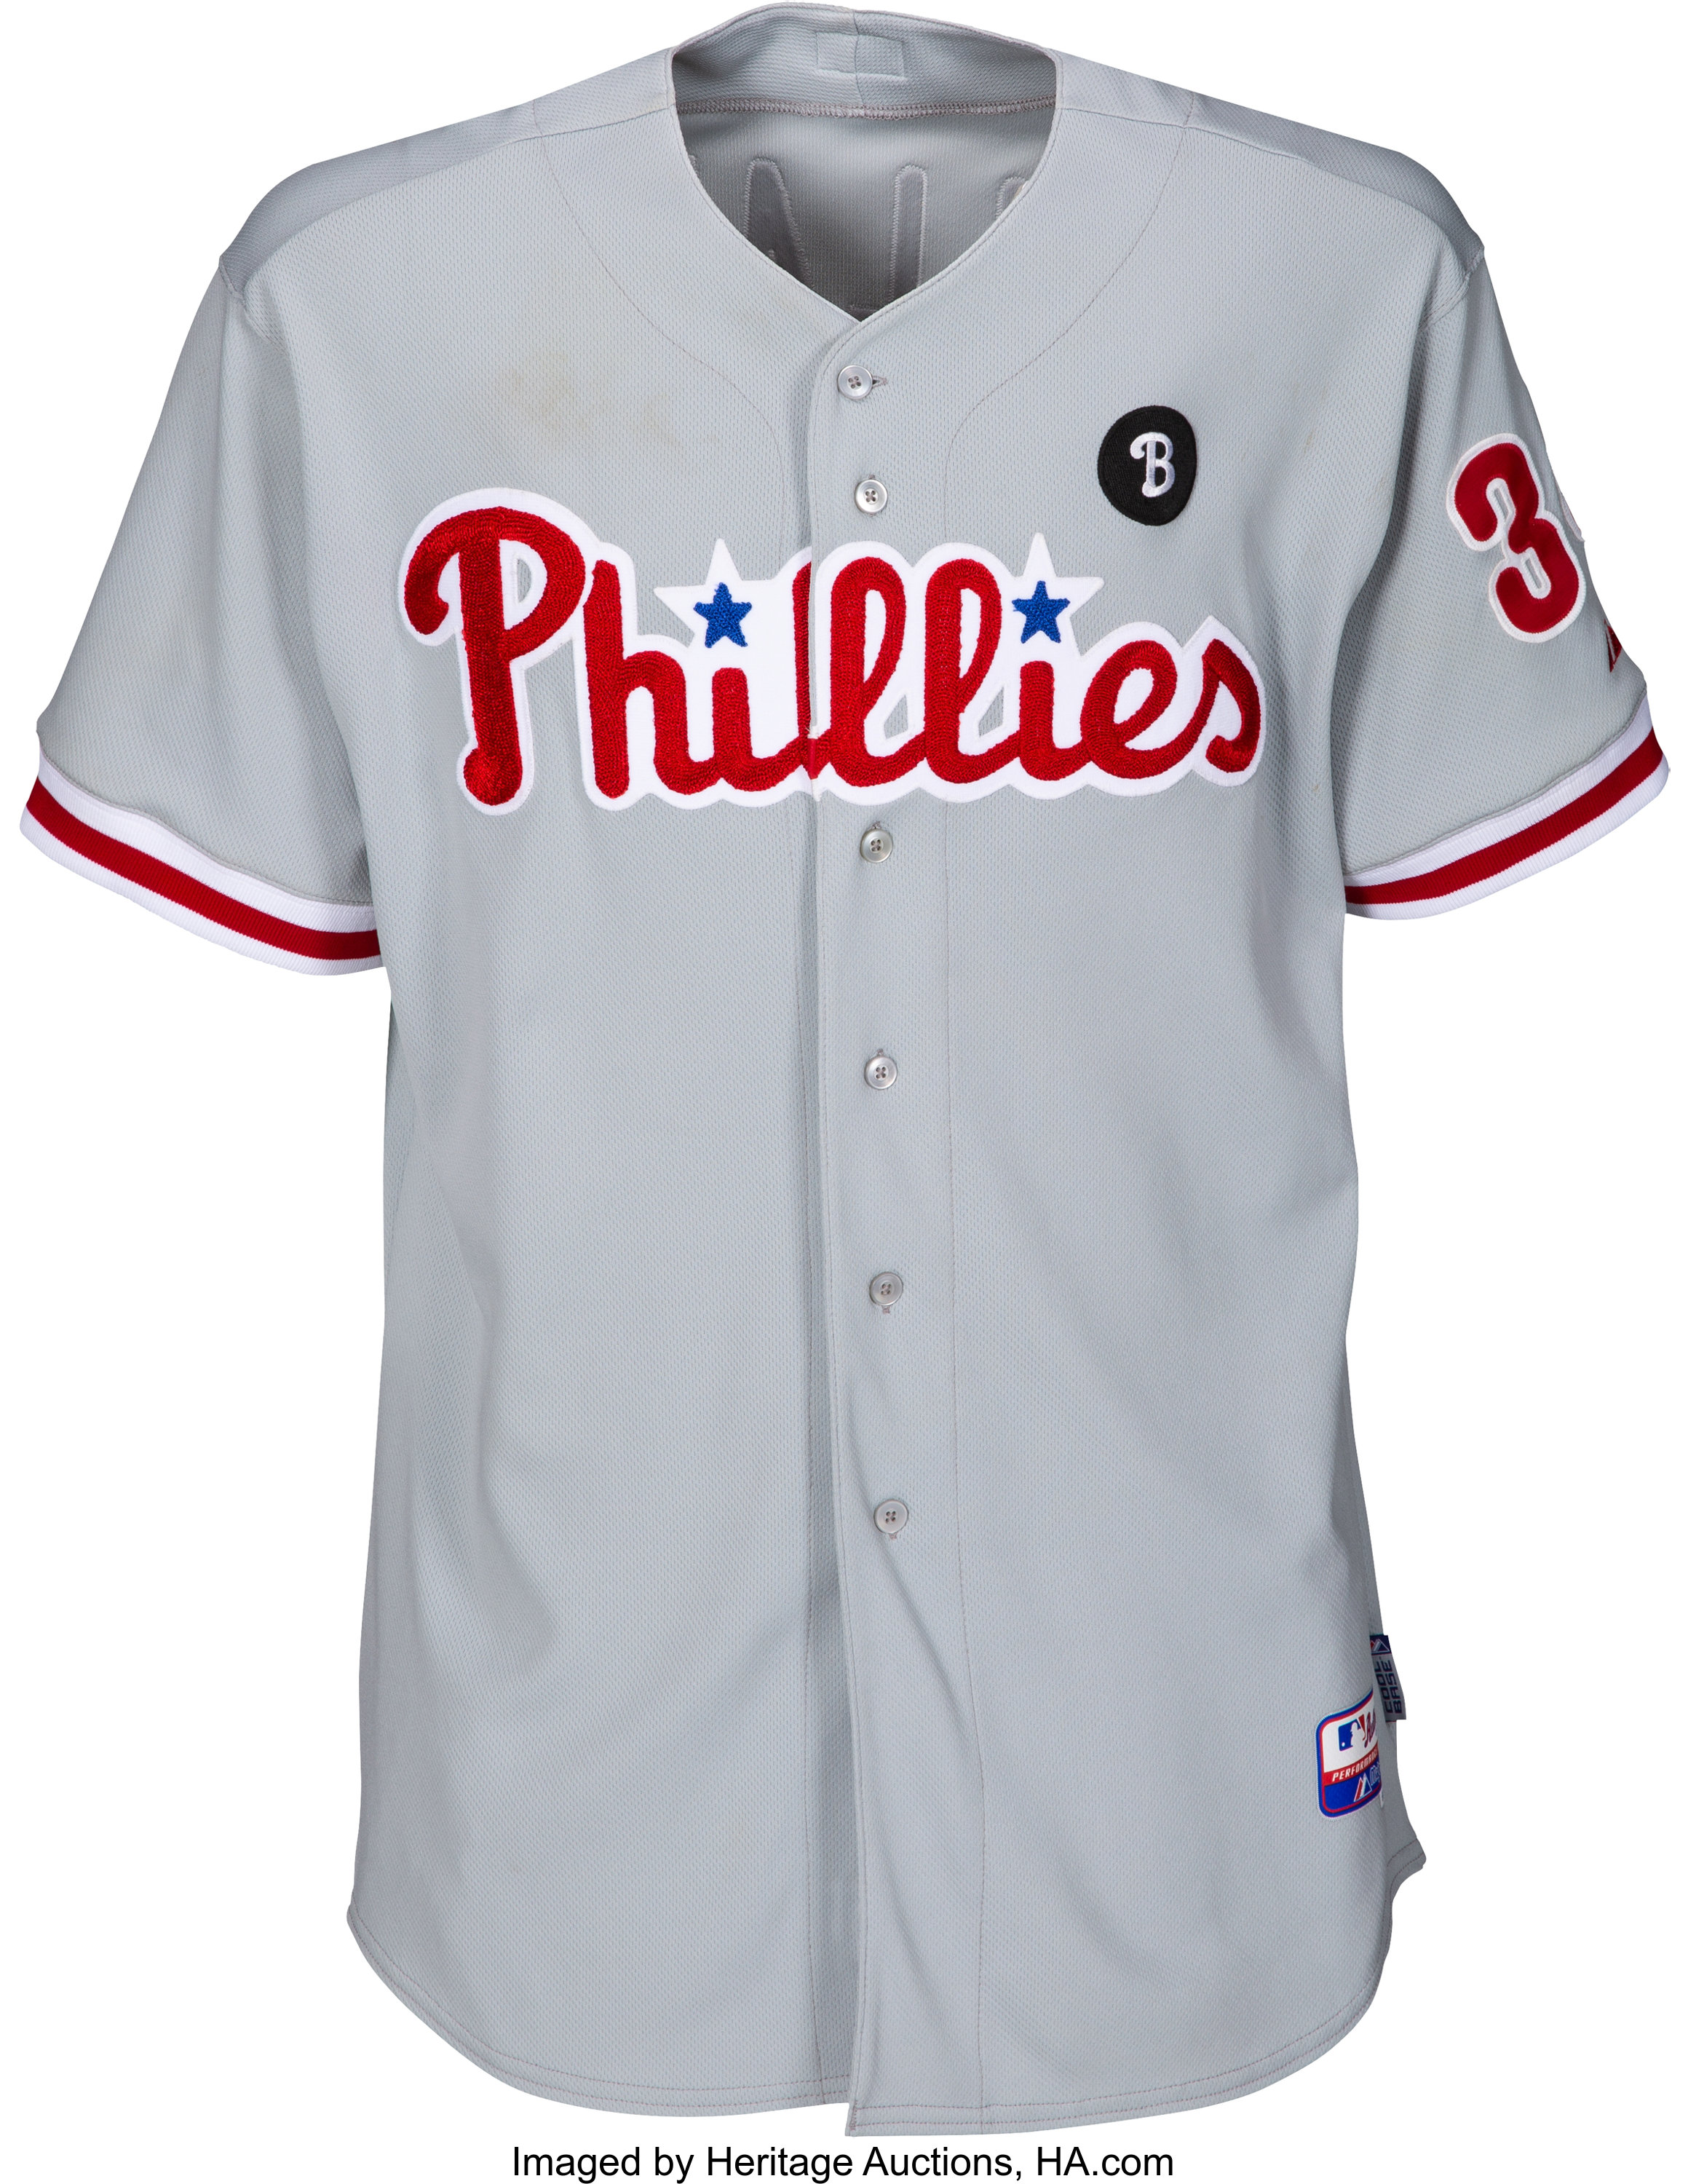 Philadelphia Phillies MLB Game Worn Jersey